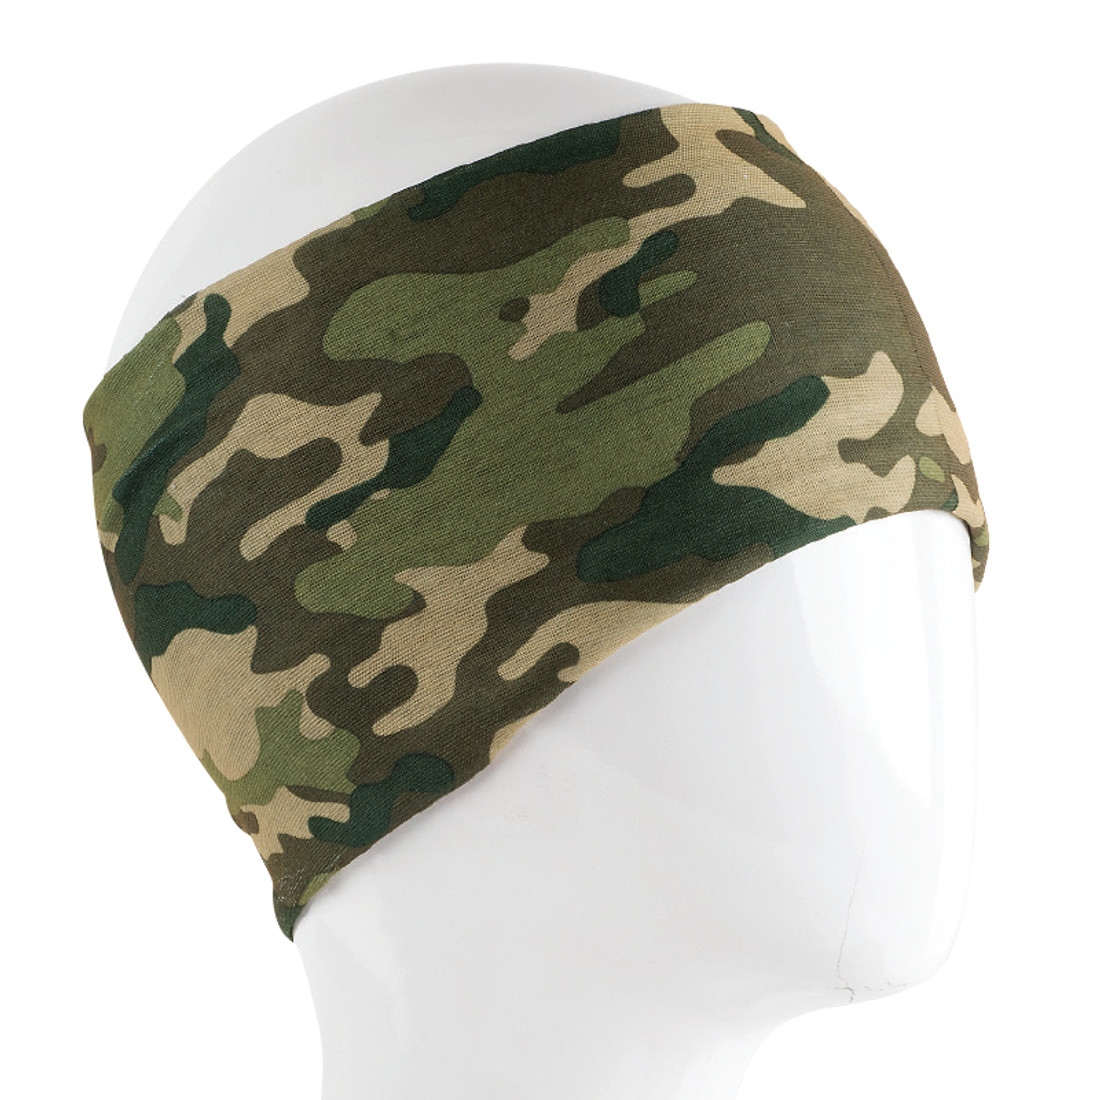 Camouflage print infinity headband and bandana.  